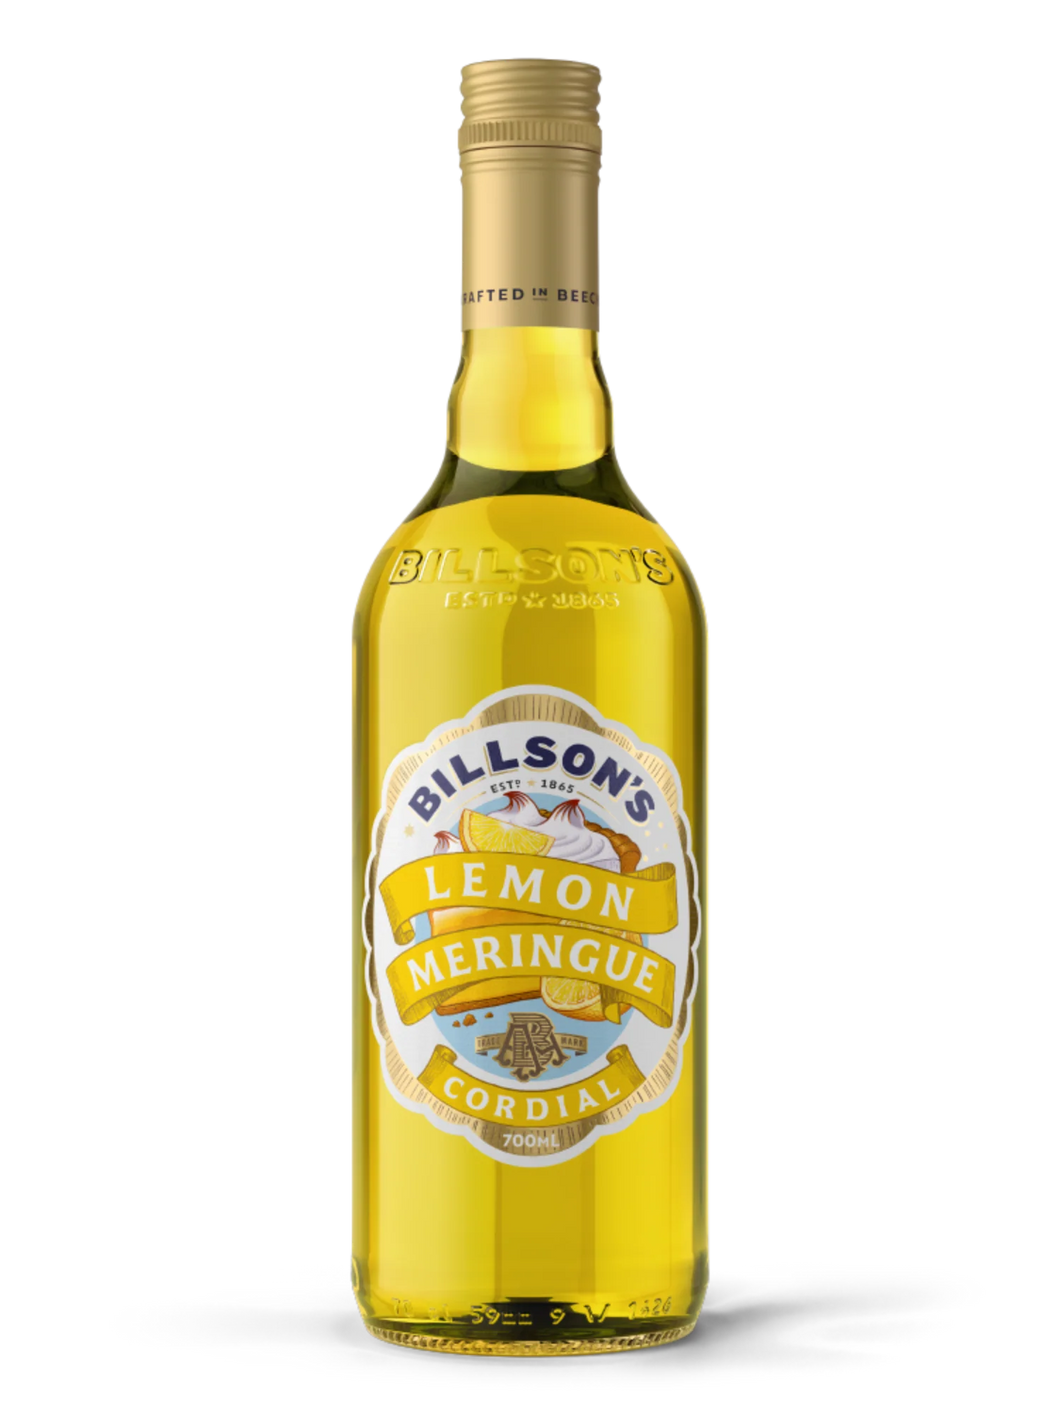 Billson's Lemon Meringue Cordial 700ml*